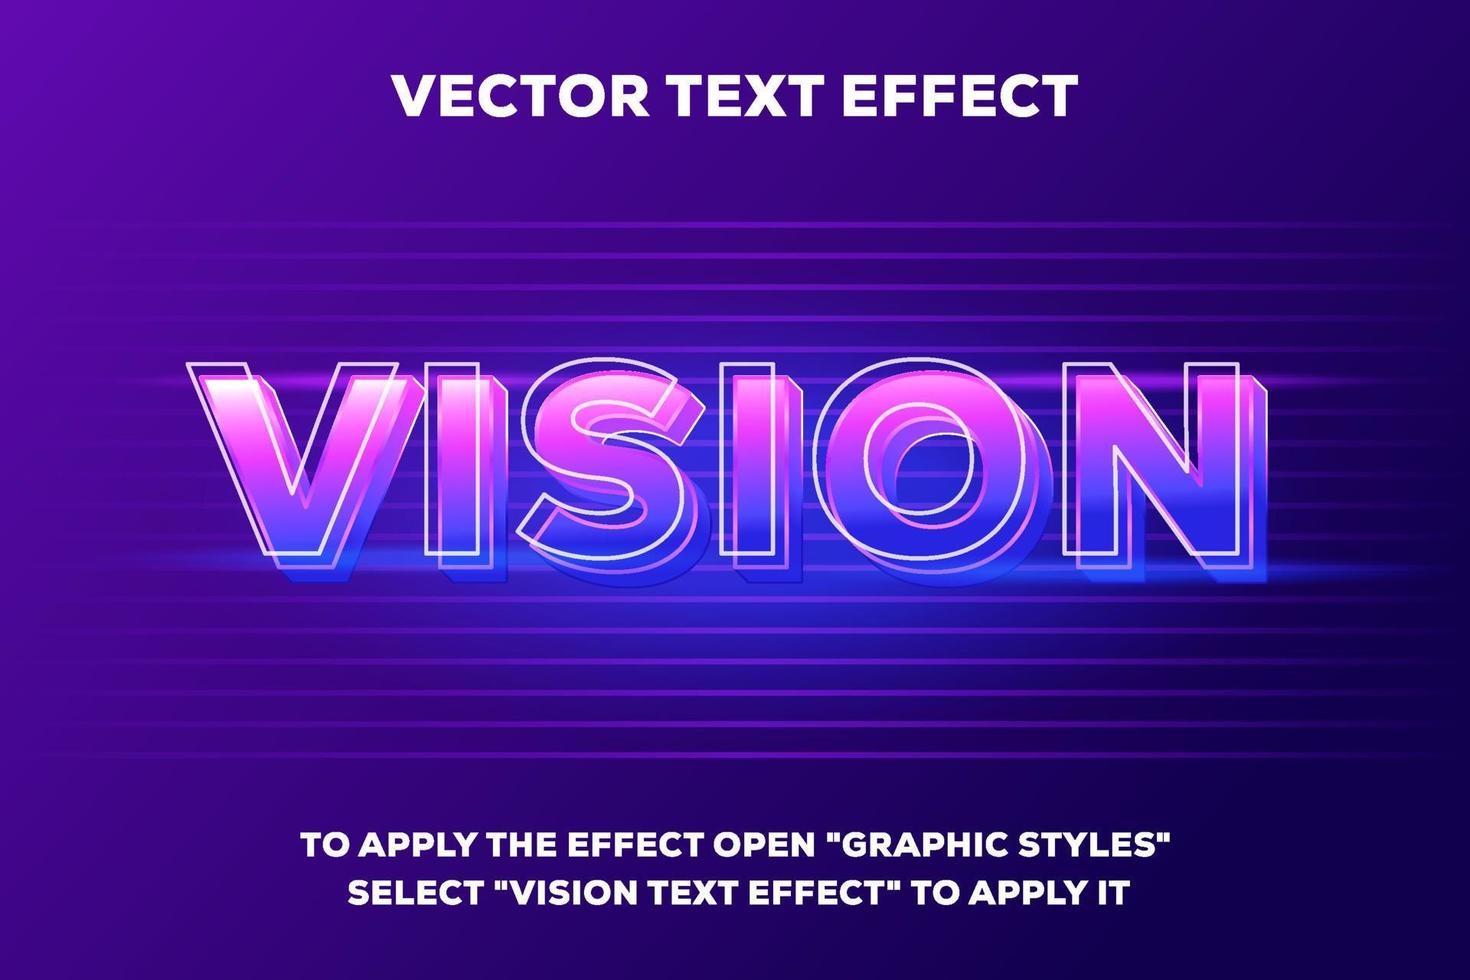 Vision vector text effect fully editable